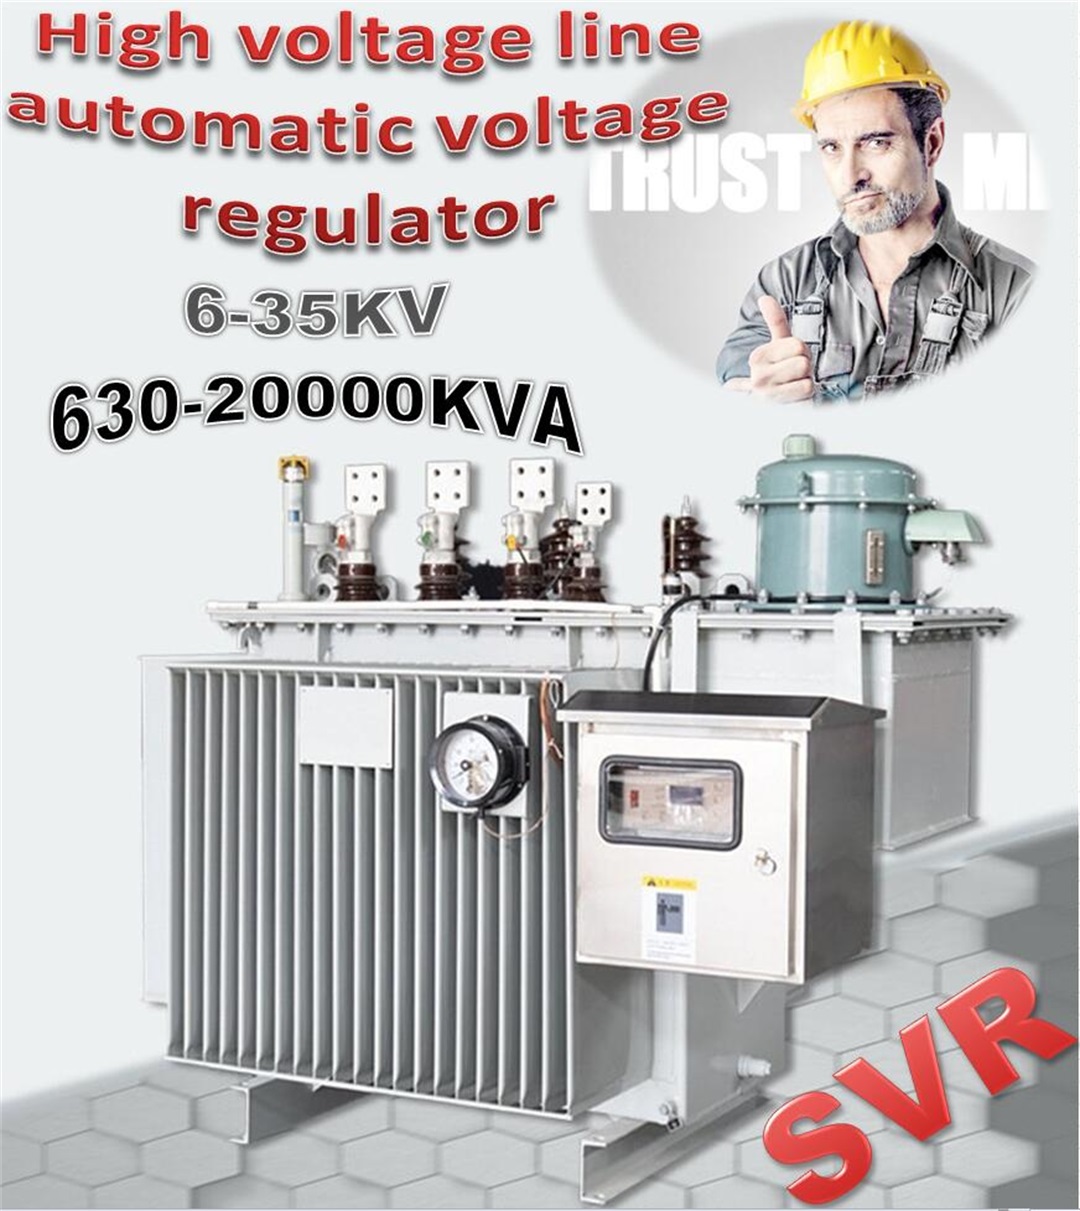 https://www.ckcele.com/svr-6-35kv-630-20000kva-outdoor-three-phase-high-voltage-line-feed-automatic-voltage-regulator-product/